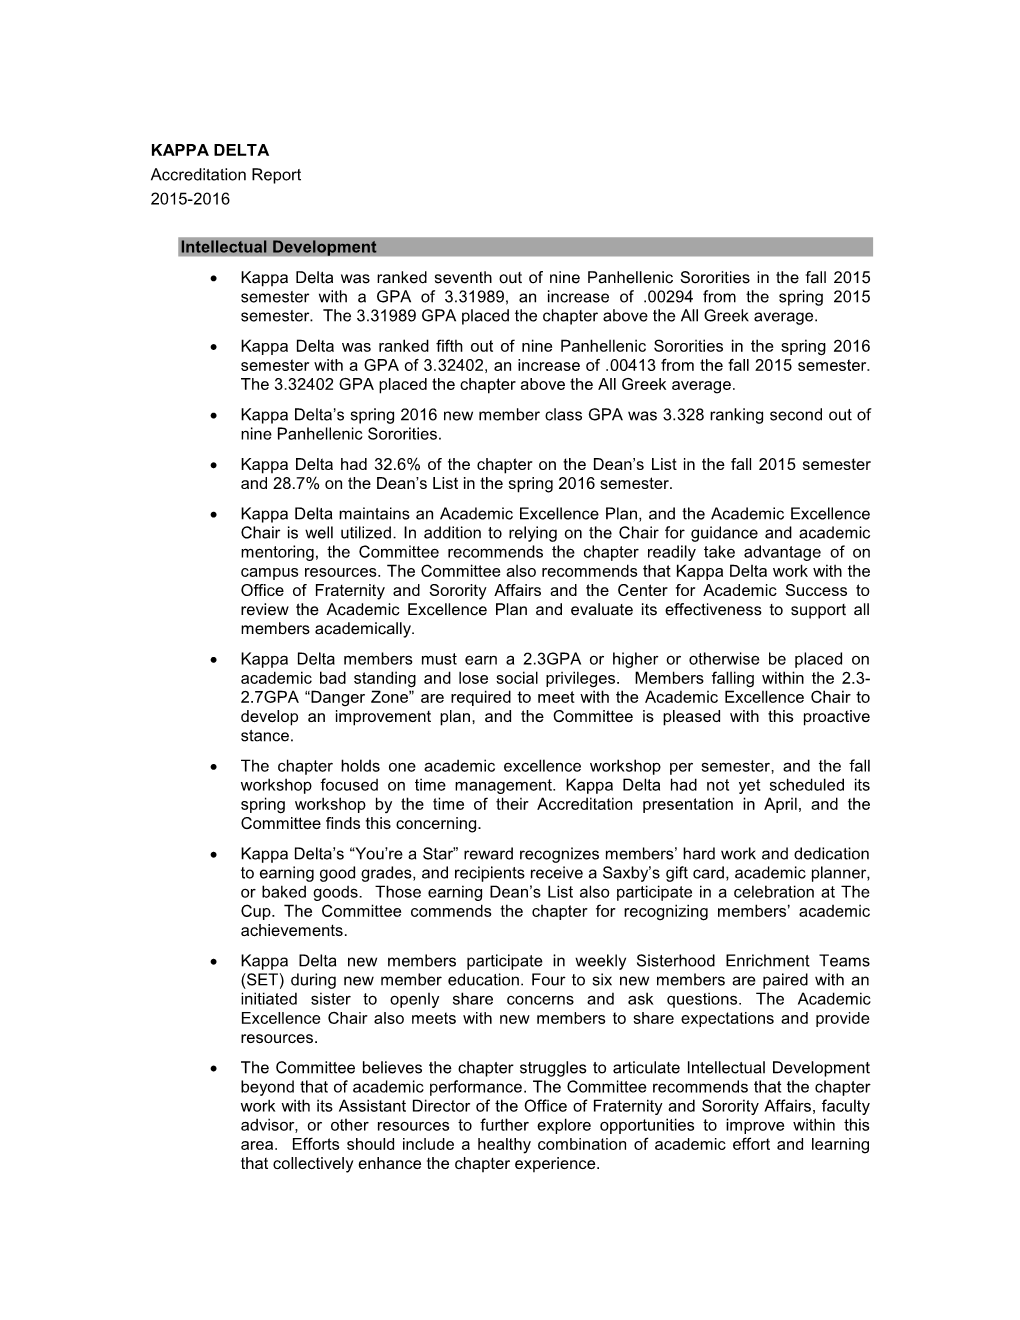 KAPPA DELTA Accreditation Report 2015-2016